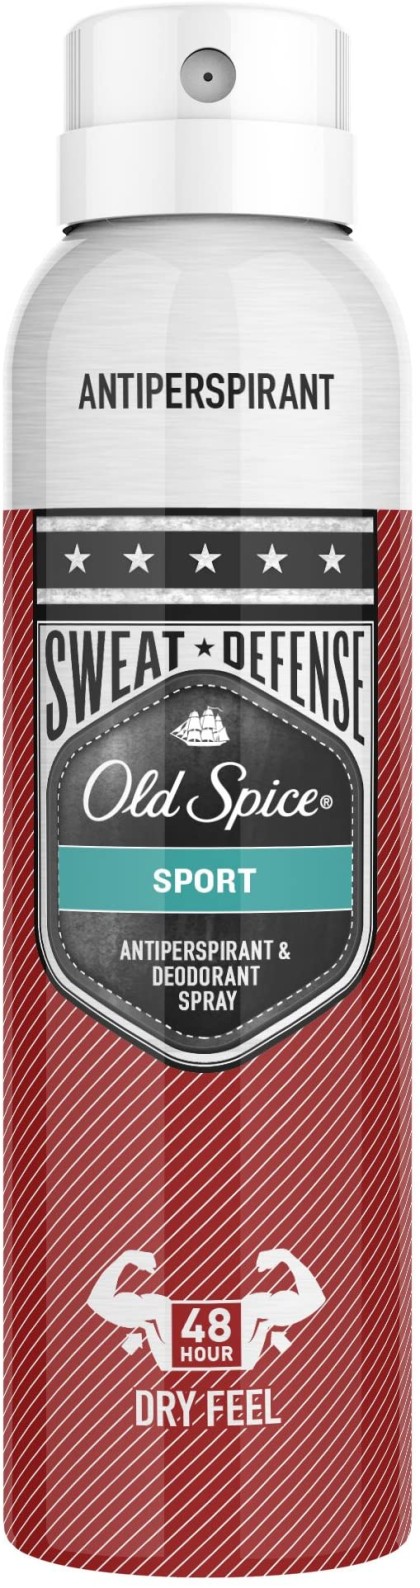 Old Spice deo spray 150ml Sport